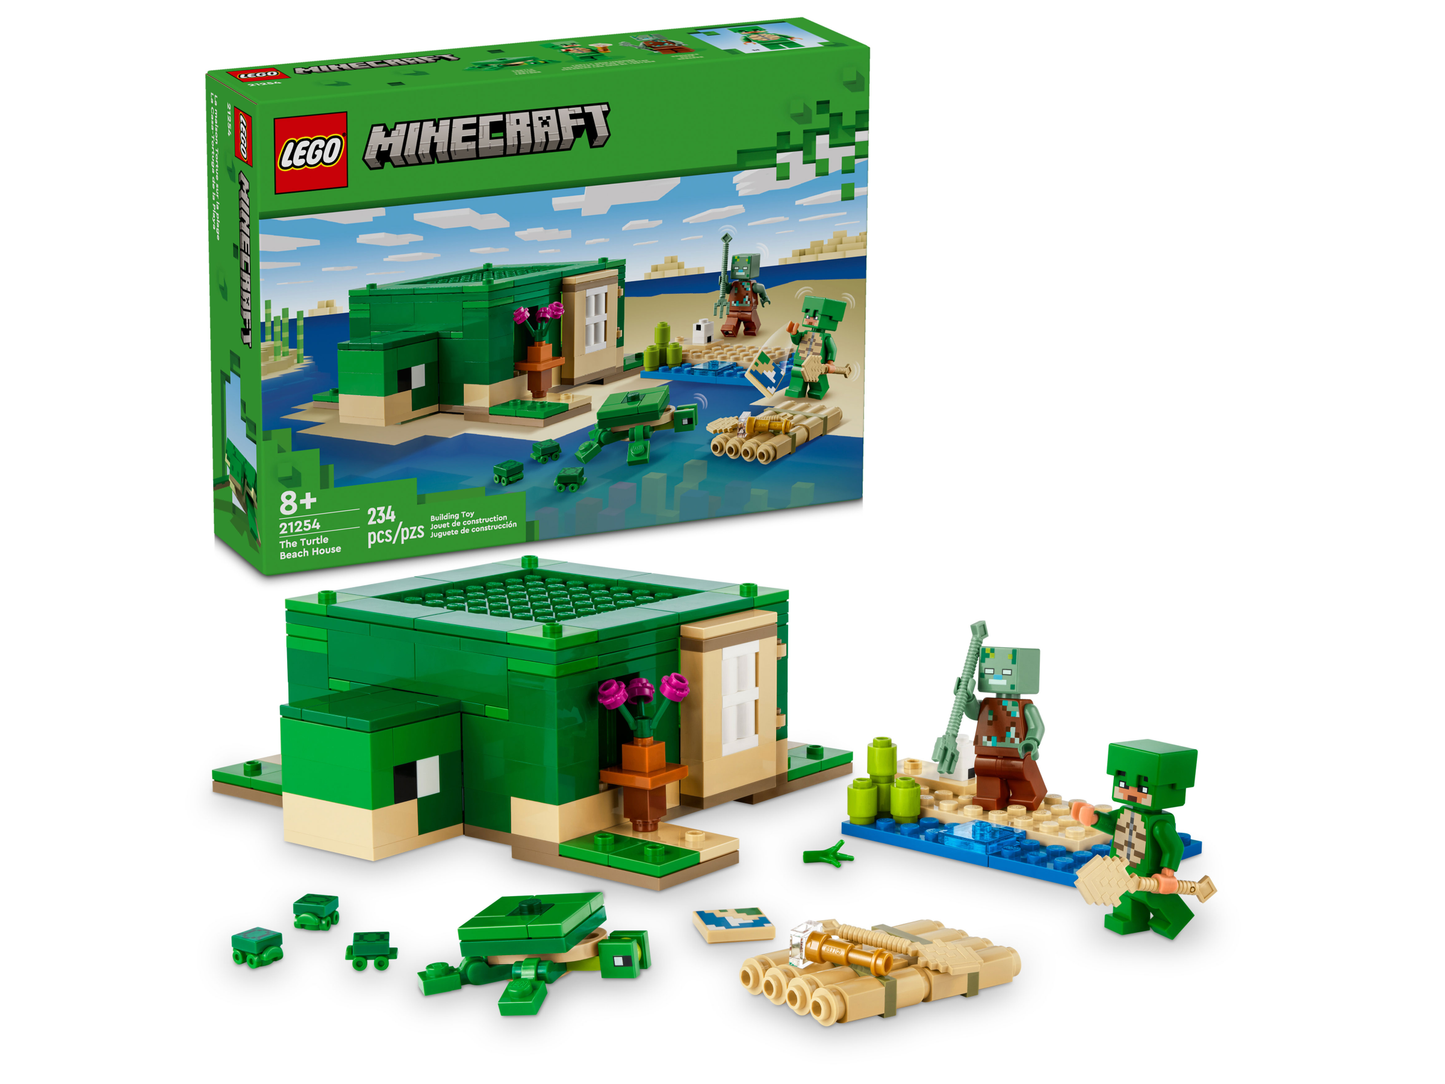 LEGO MINECRAFT TURTLE BEACH HOUSE 21254